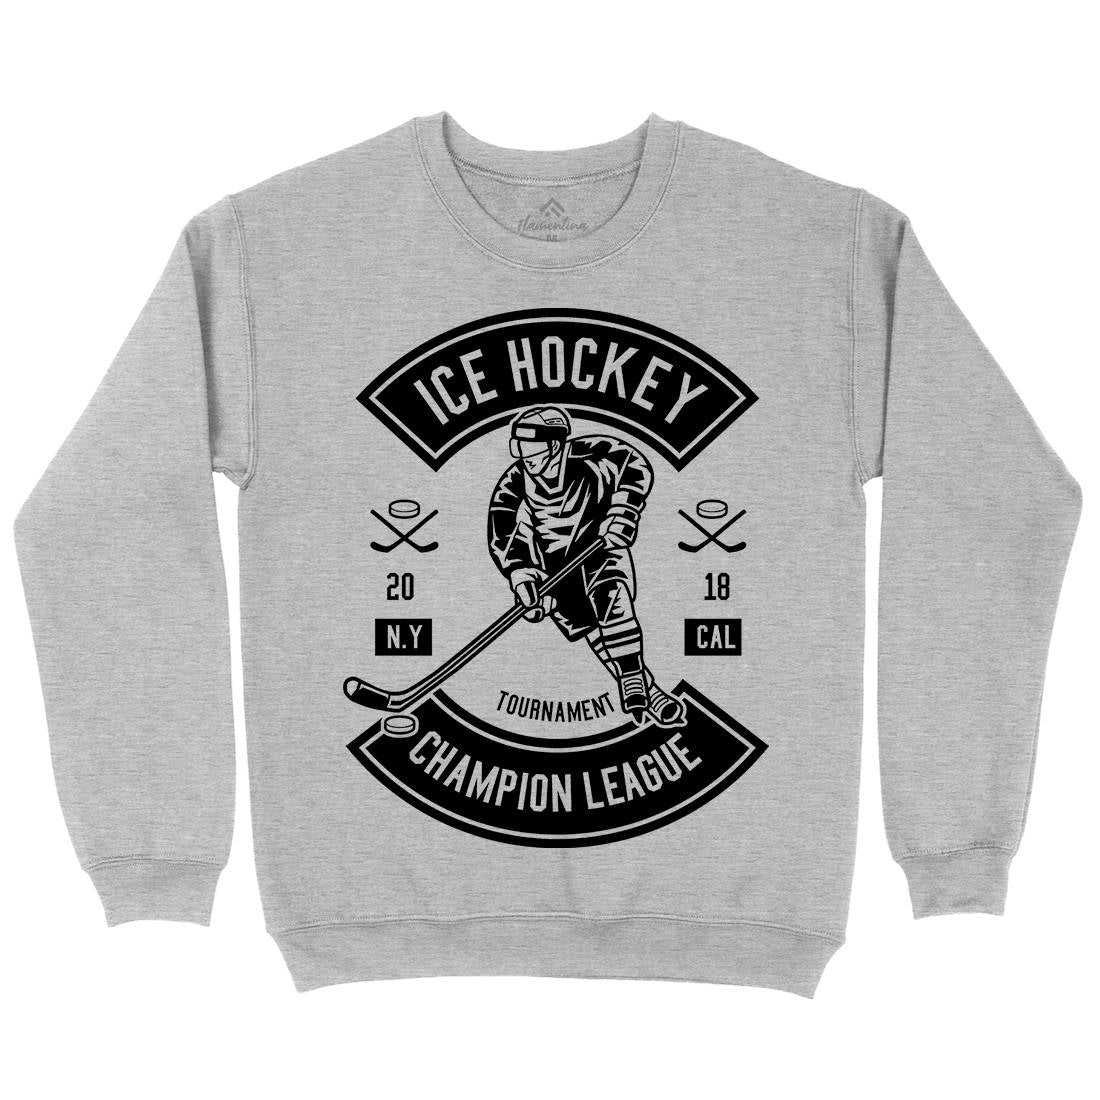 Ice Hockey Champion League Mens Crew Neck Sweatshirt Sport B564